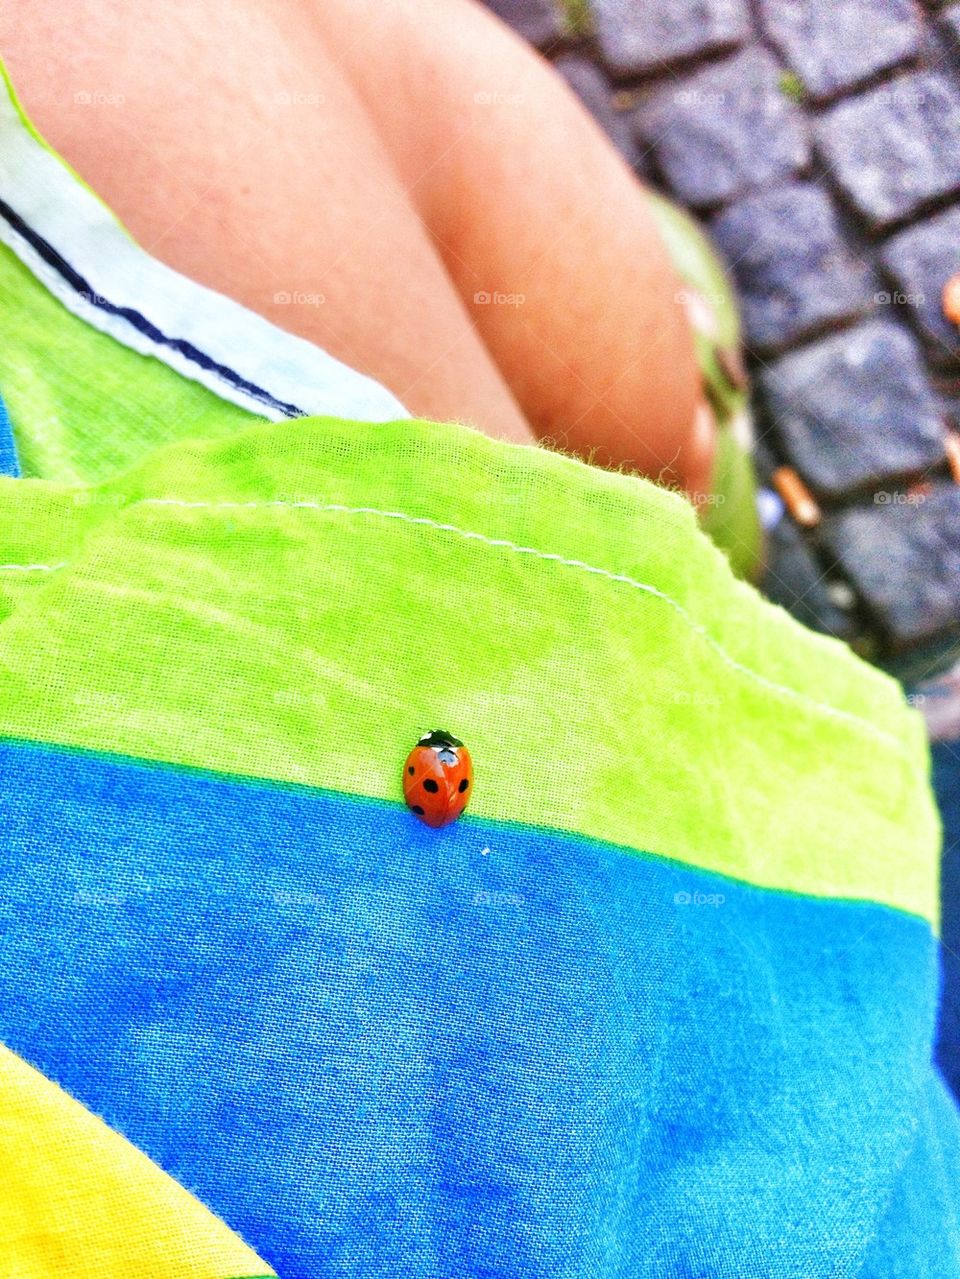 ladybug landing